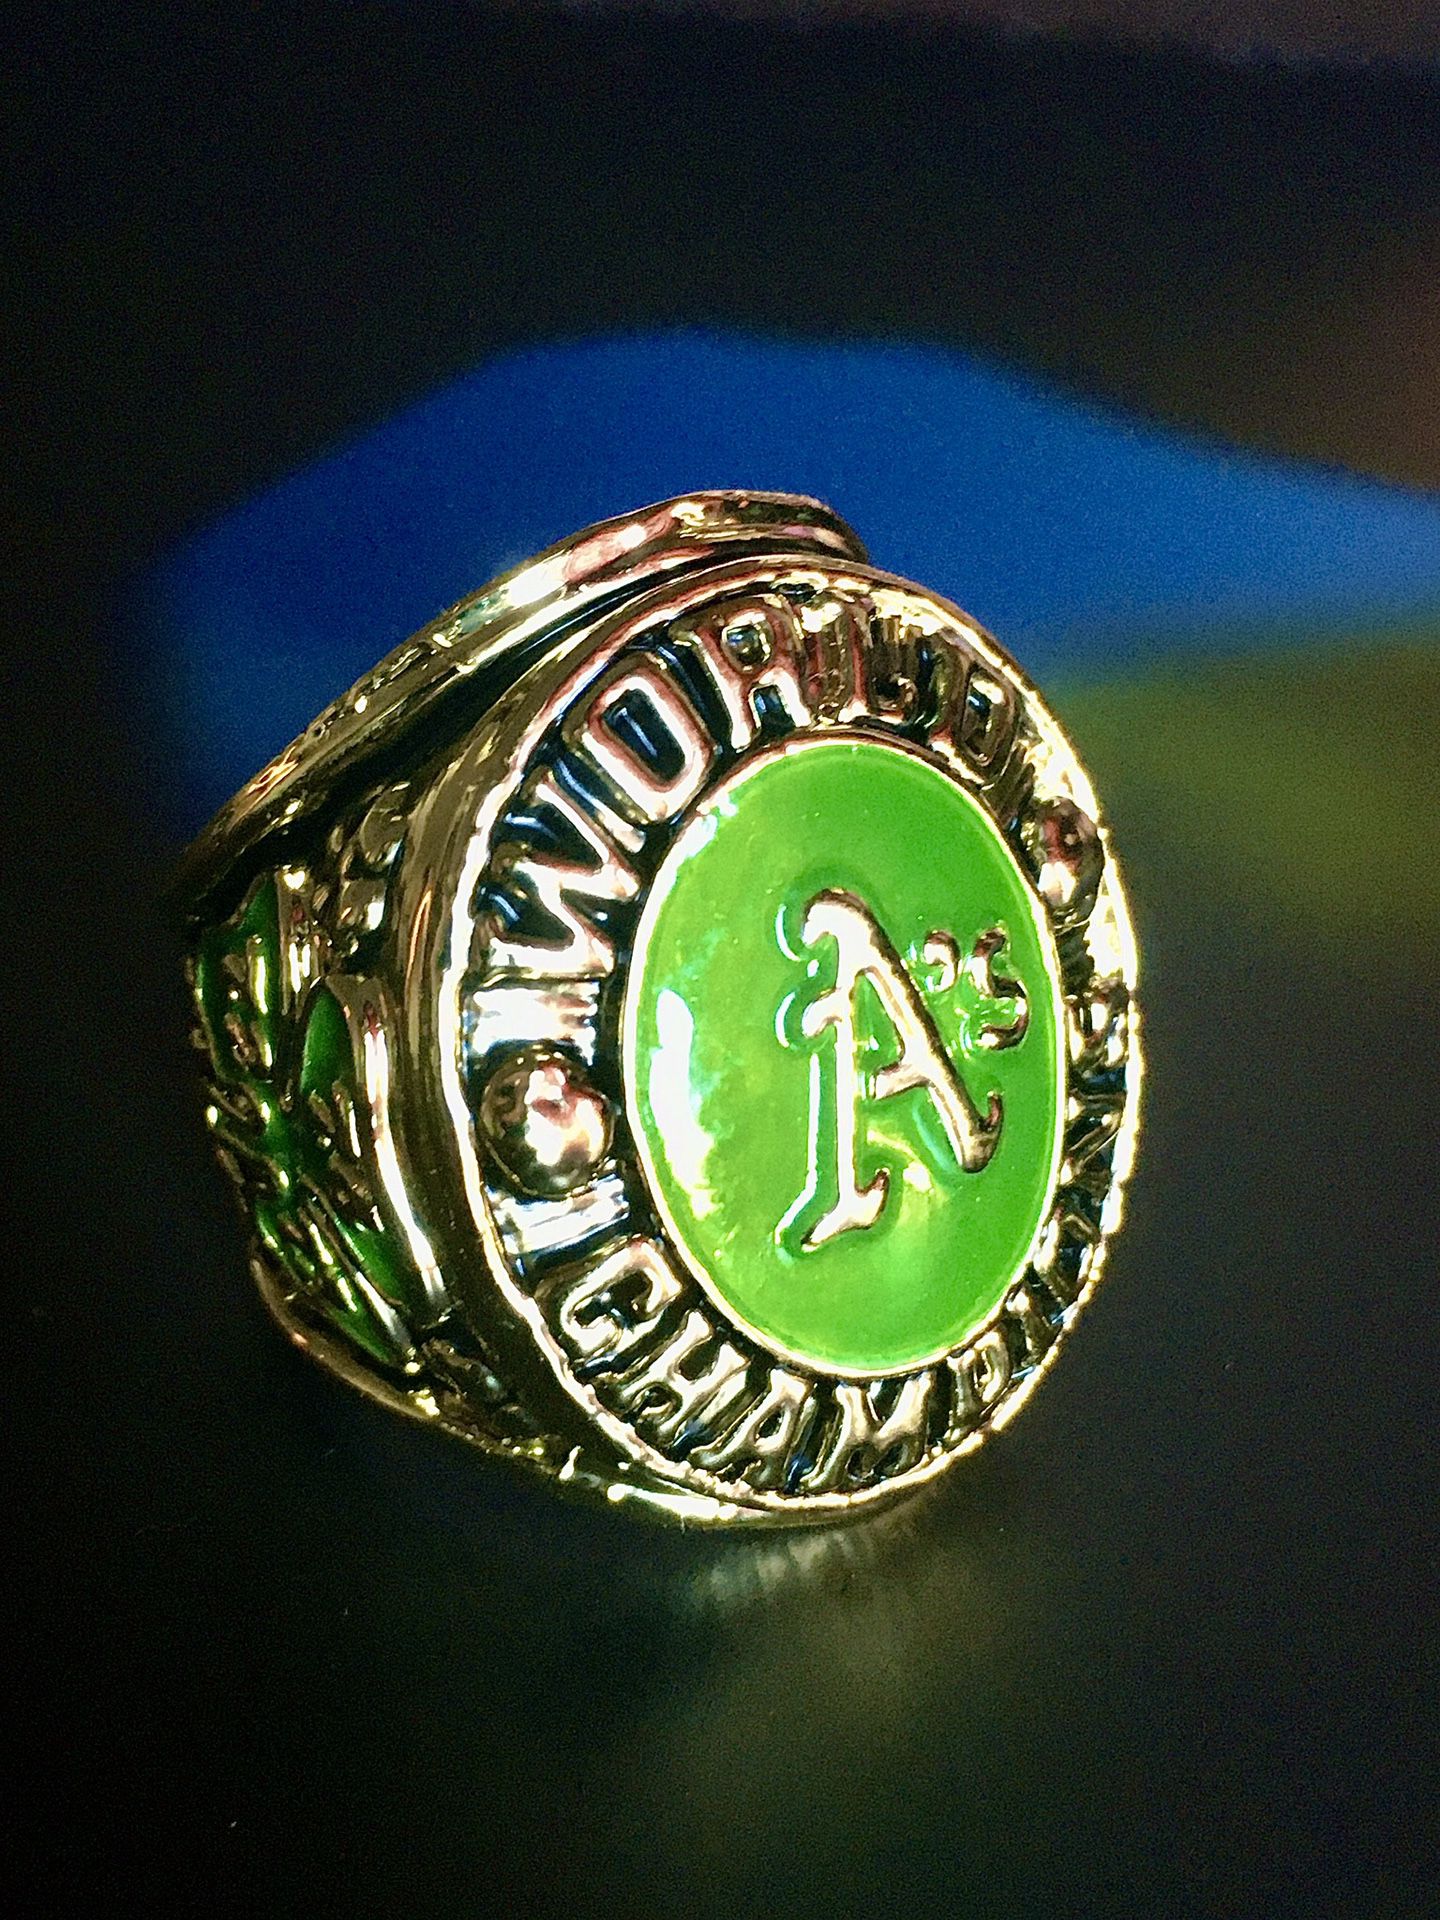 1974 Oakland Athletics World Series Fan Ring (Brand New)